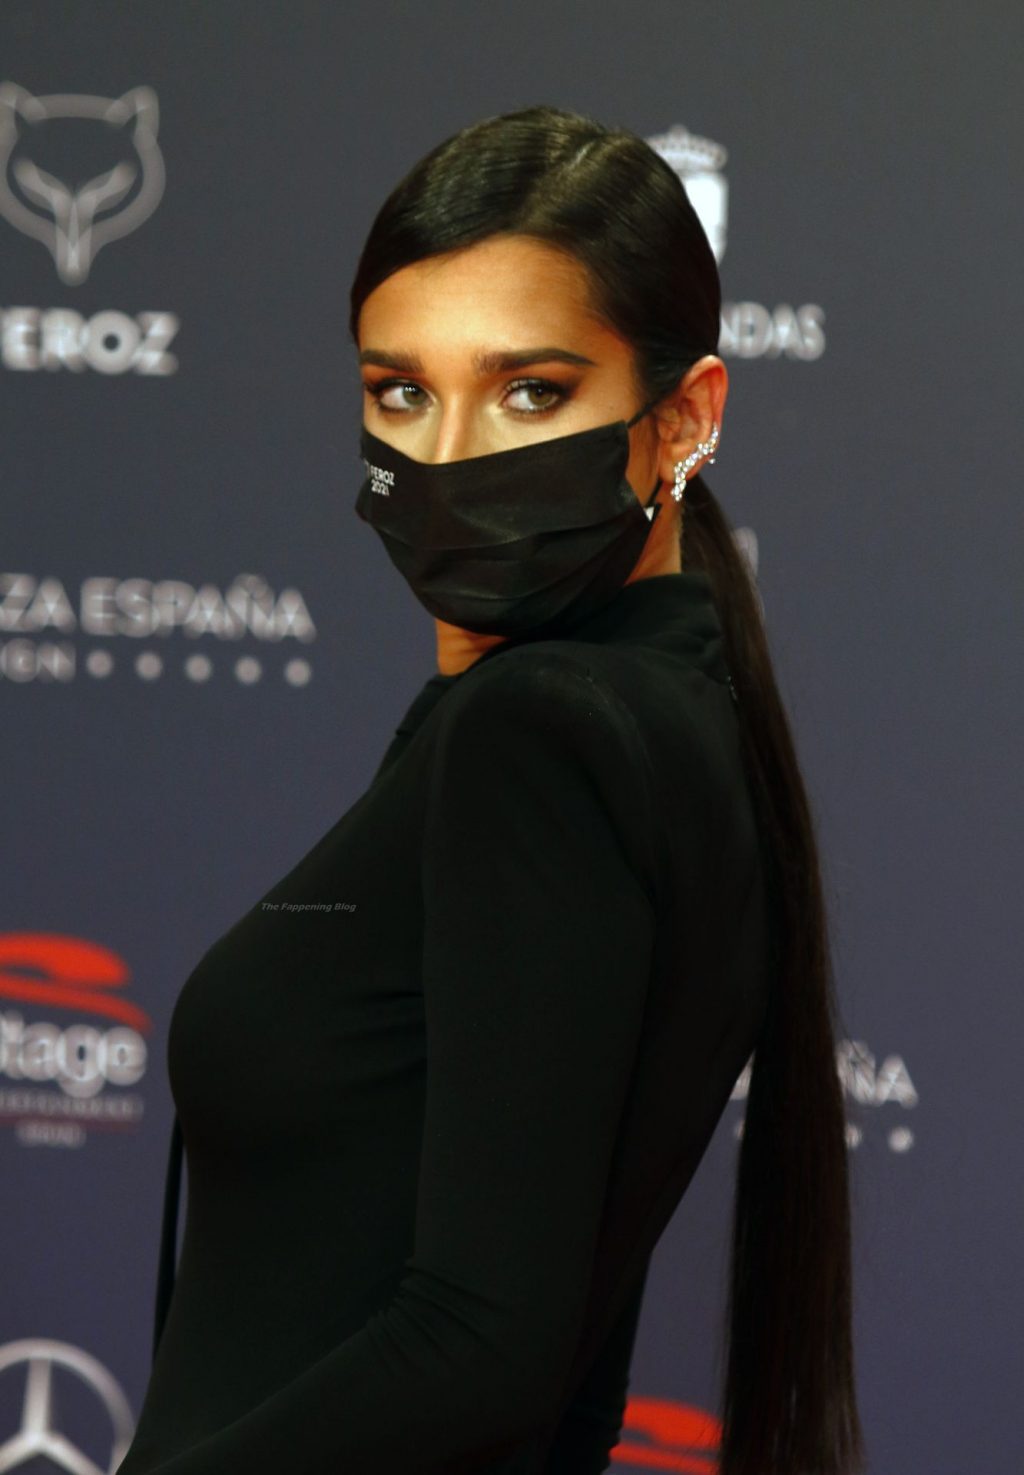 Lola Rodriguez Looks Hot in a Black Dress at Feroz Awards (12 Photos)